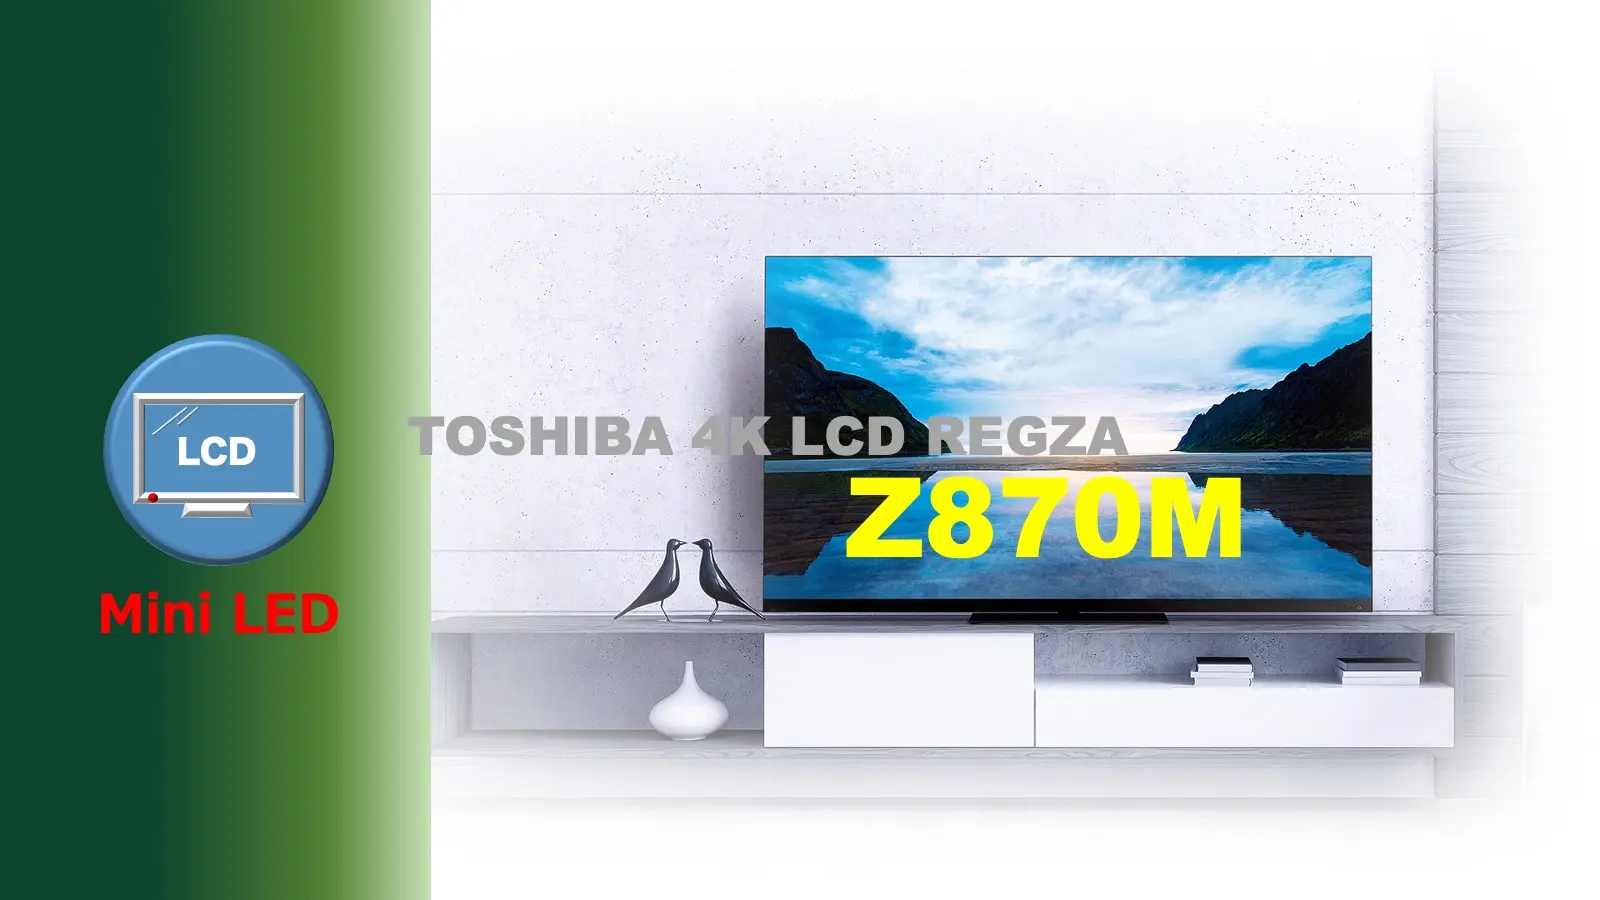 TVS REGZA(旧東芝) 4K Mini LED 液晶レグザ Z870Mレビュー記事用のオリジナルアイキャッチ画像